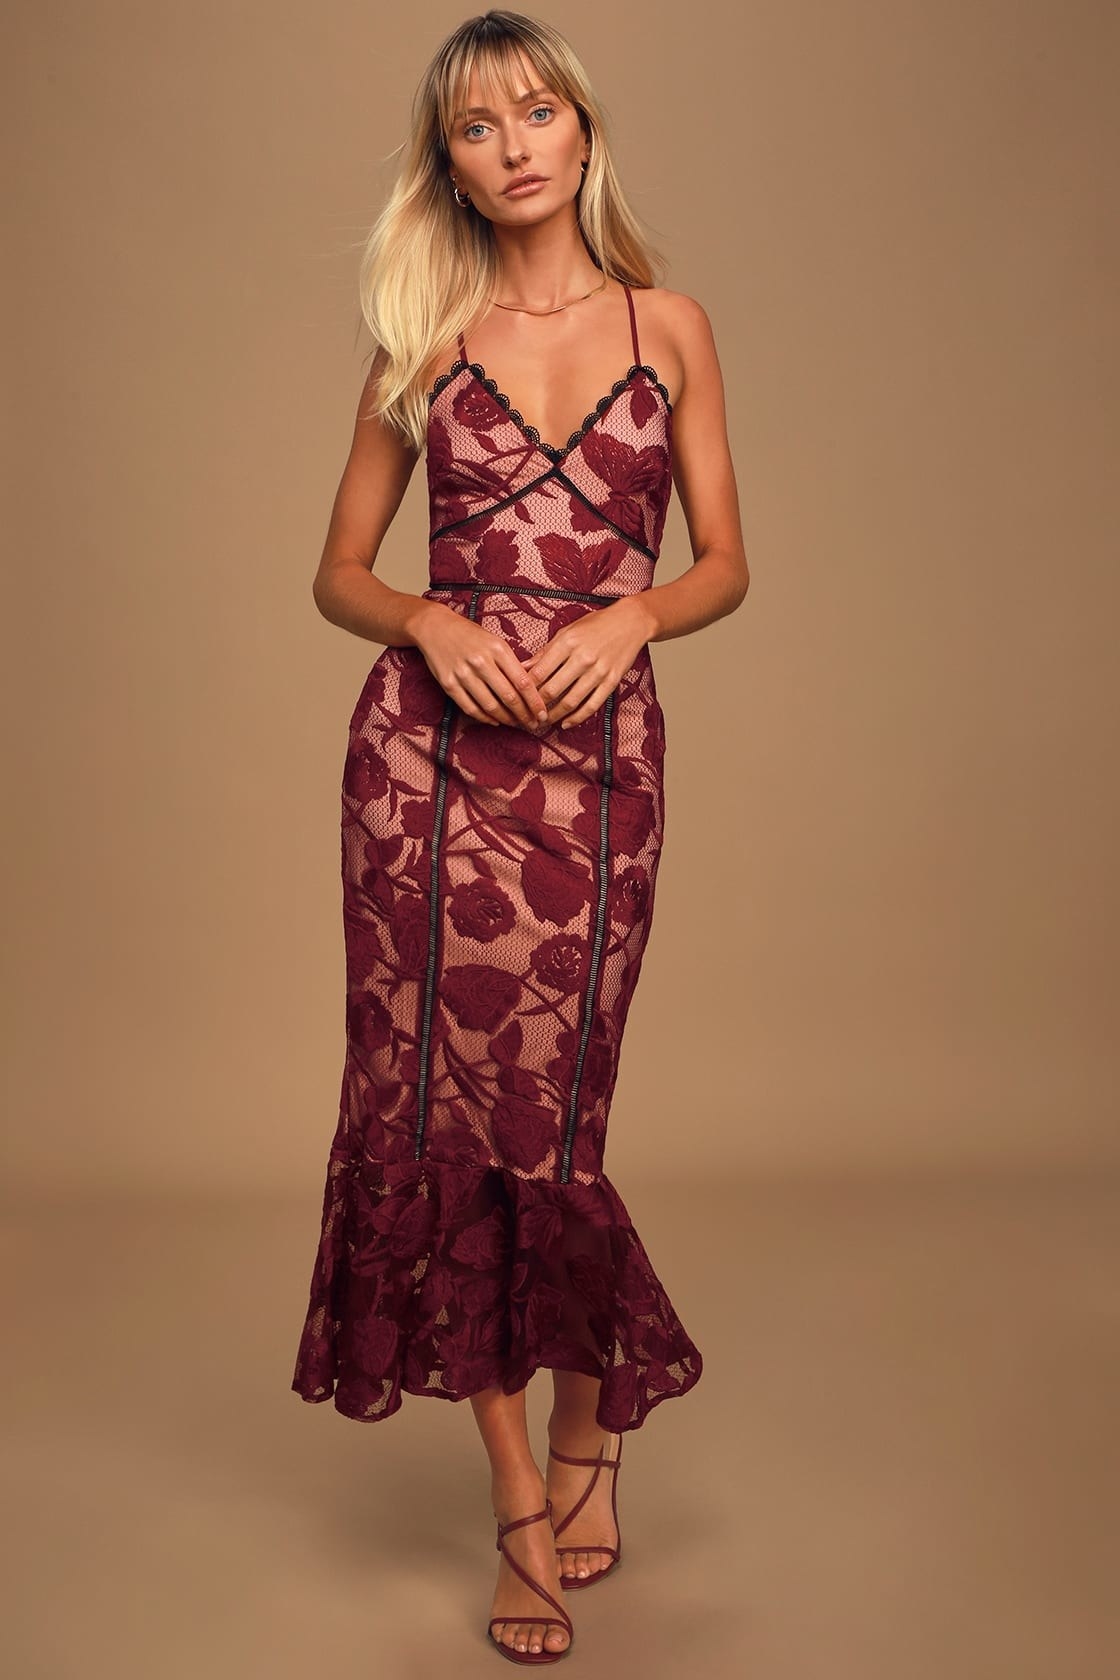 model in maroon trumpet midi dress with spaghetti straps